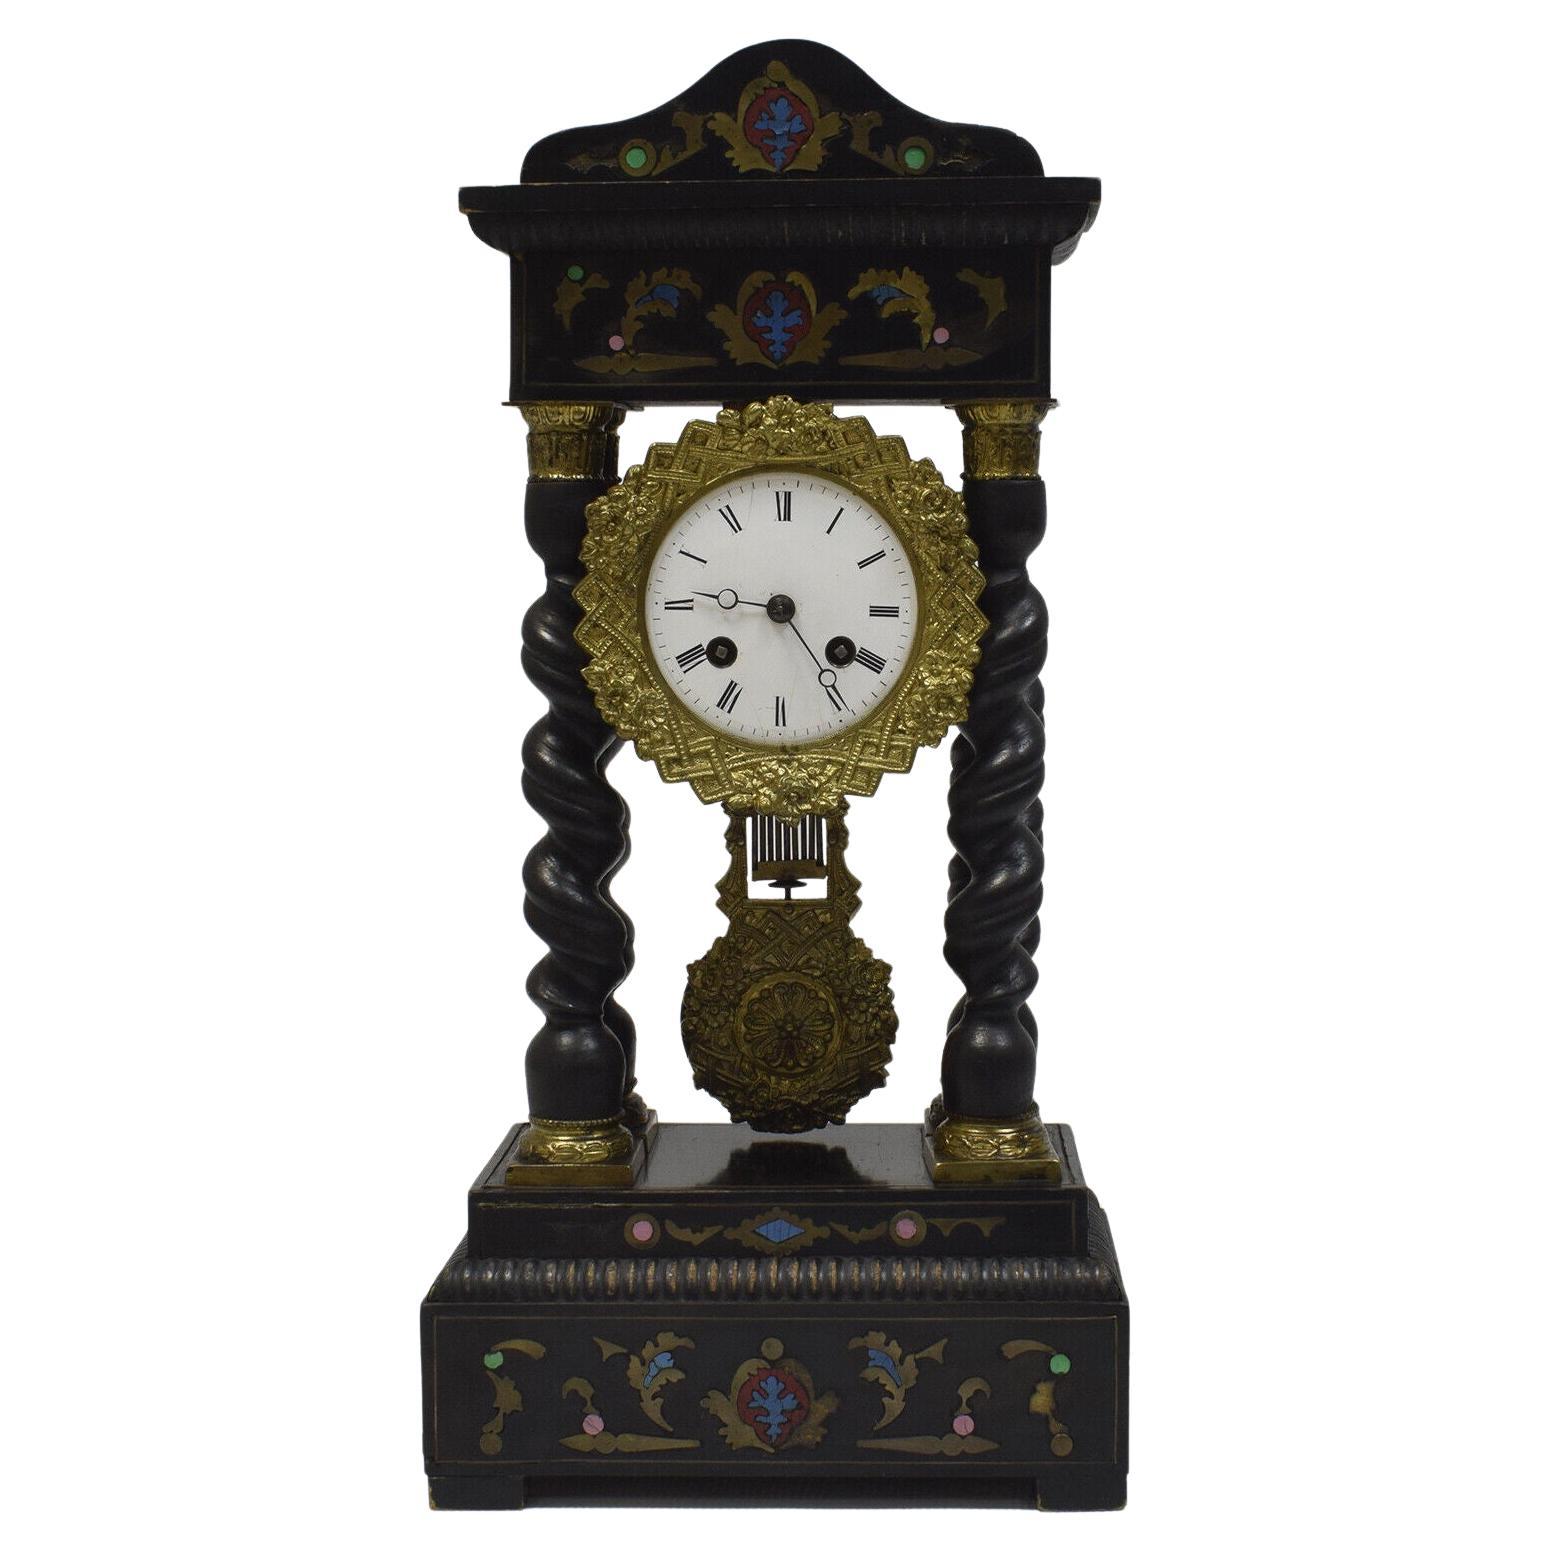 Functional 19th Century S.Marti Column Clock - 46 Cm - 1G06 For Sale